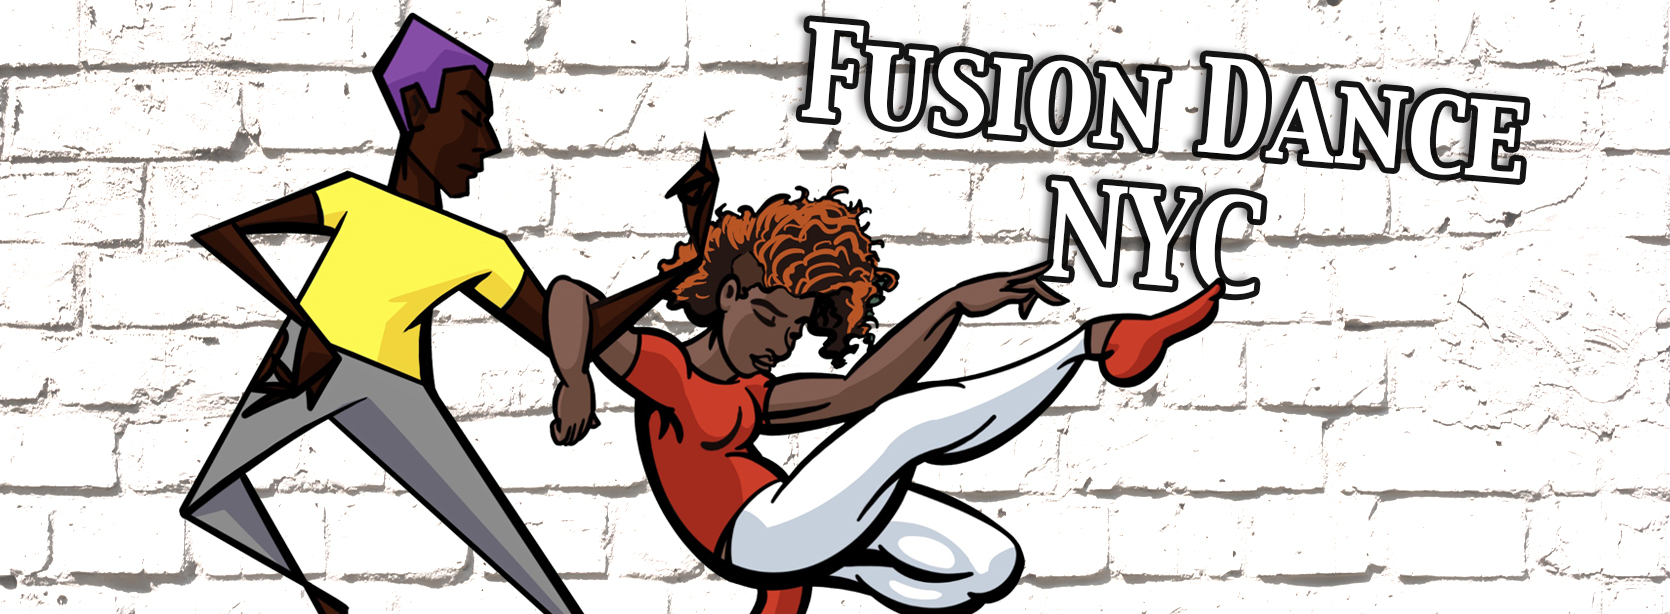 Tag: <span>fusion dance dj</span>